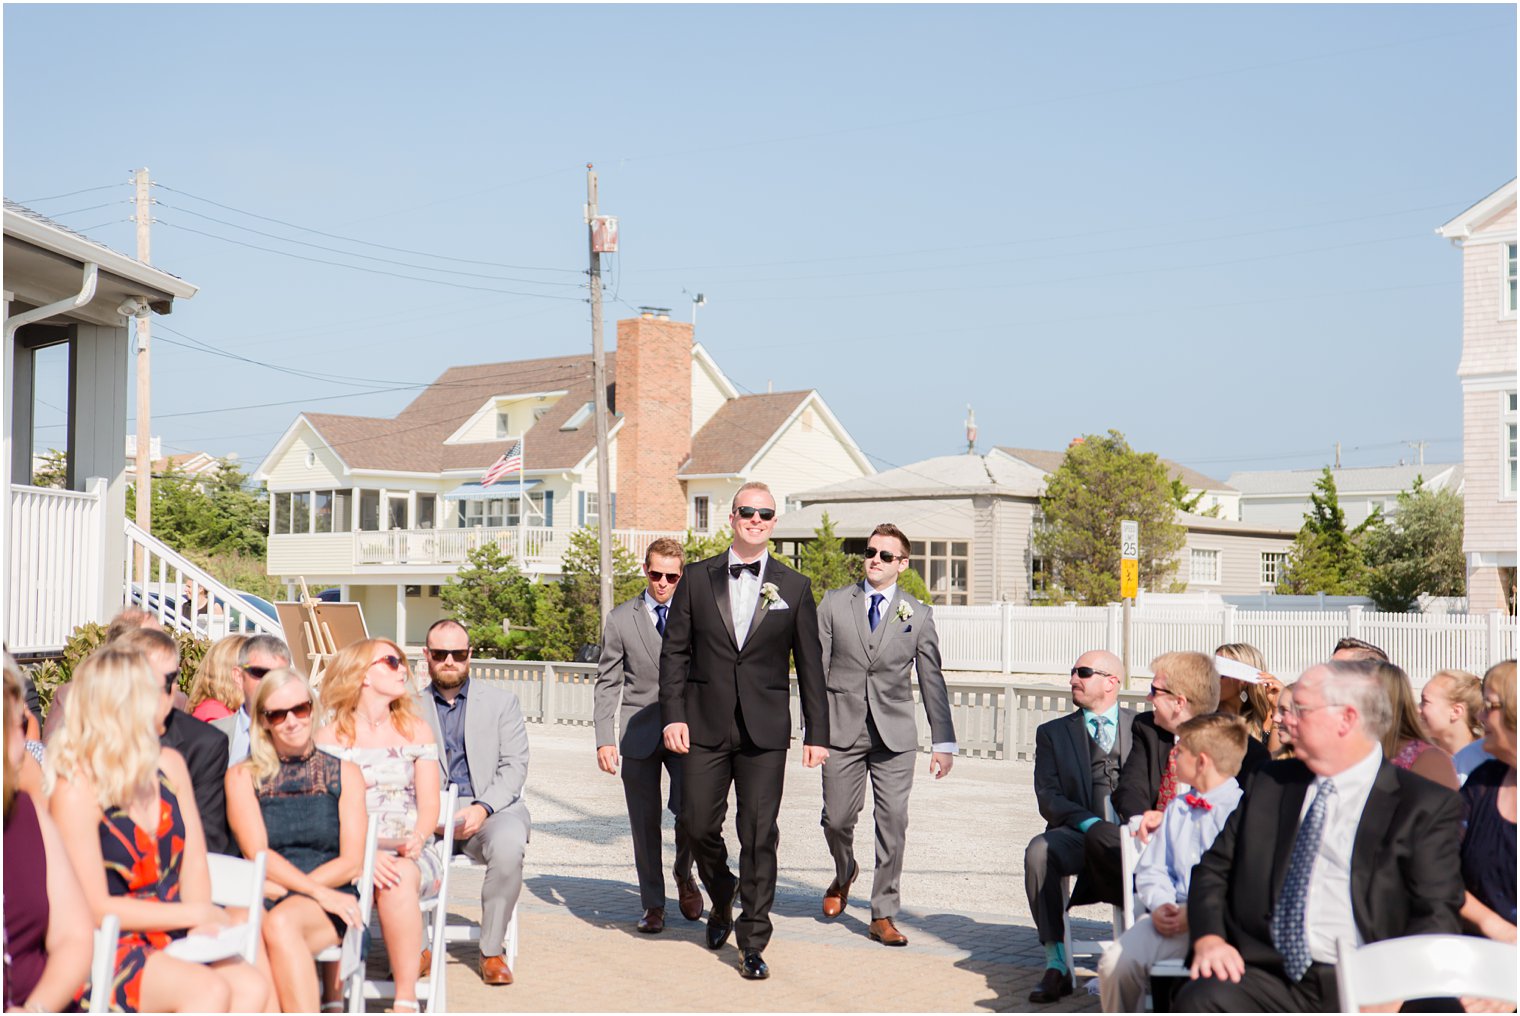 Outdoor wedding ceremony at Brant Beach Yacht Club